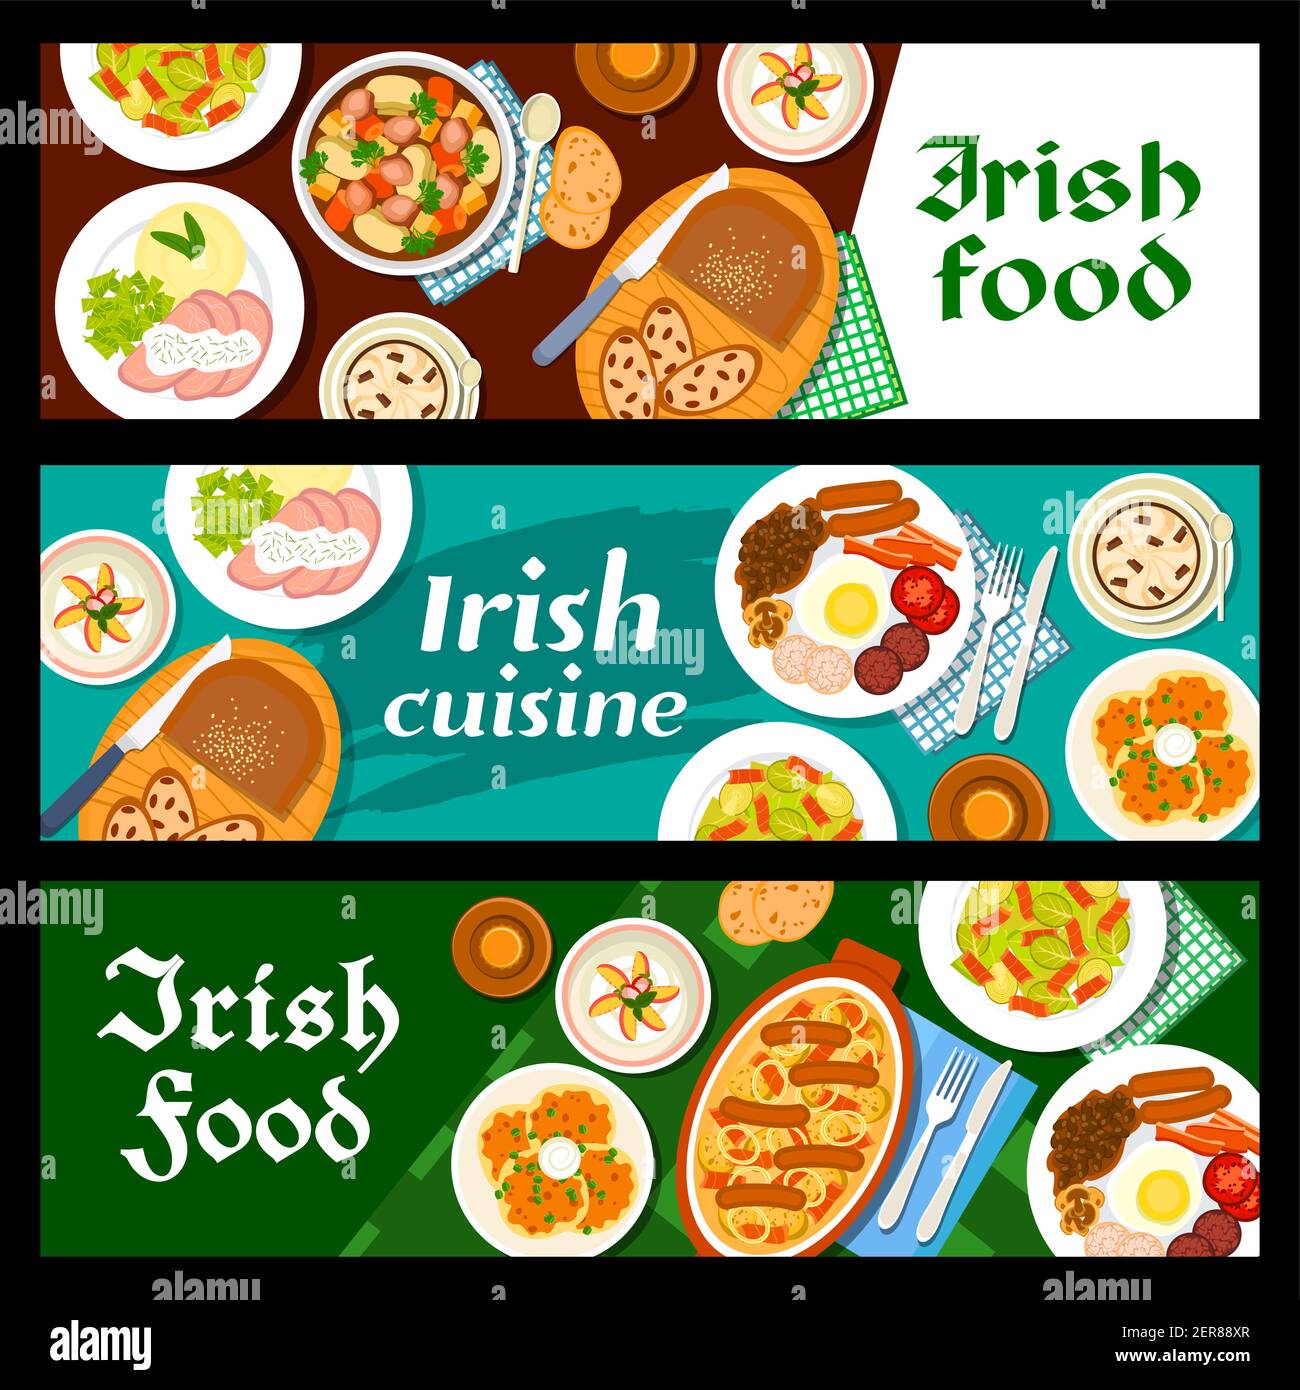 Food, Irish breakfast, Ireland cuisine vector banners, bread, pudding with raisins, salad and beef stew meals, Irish cuisine menu, restaurant traditio Stock Vector